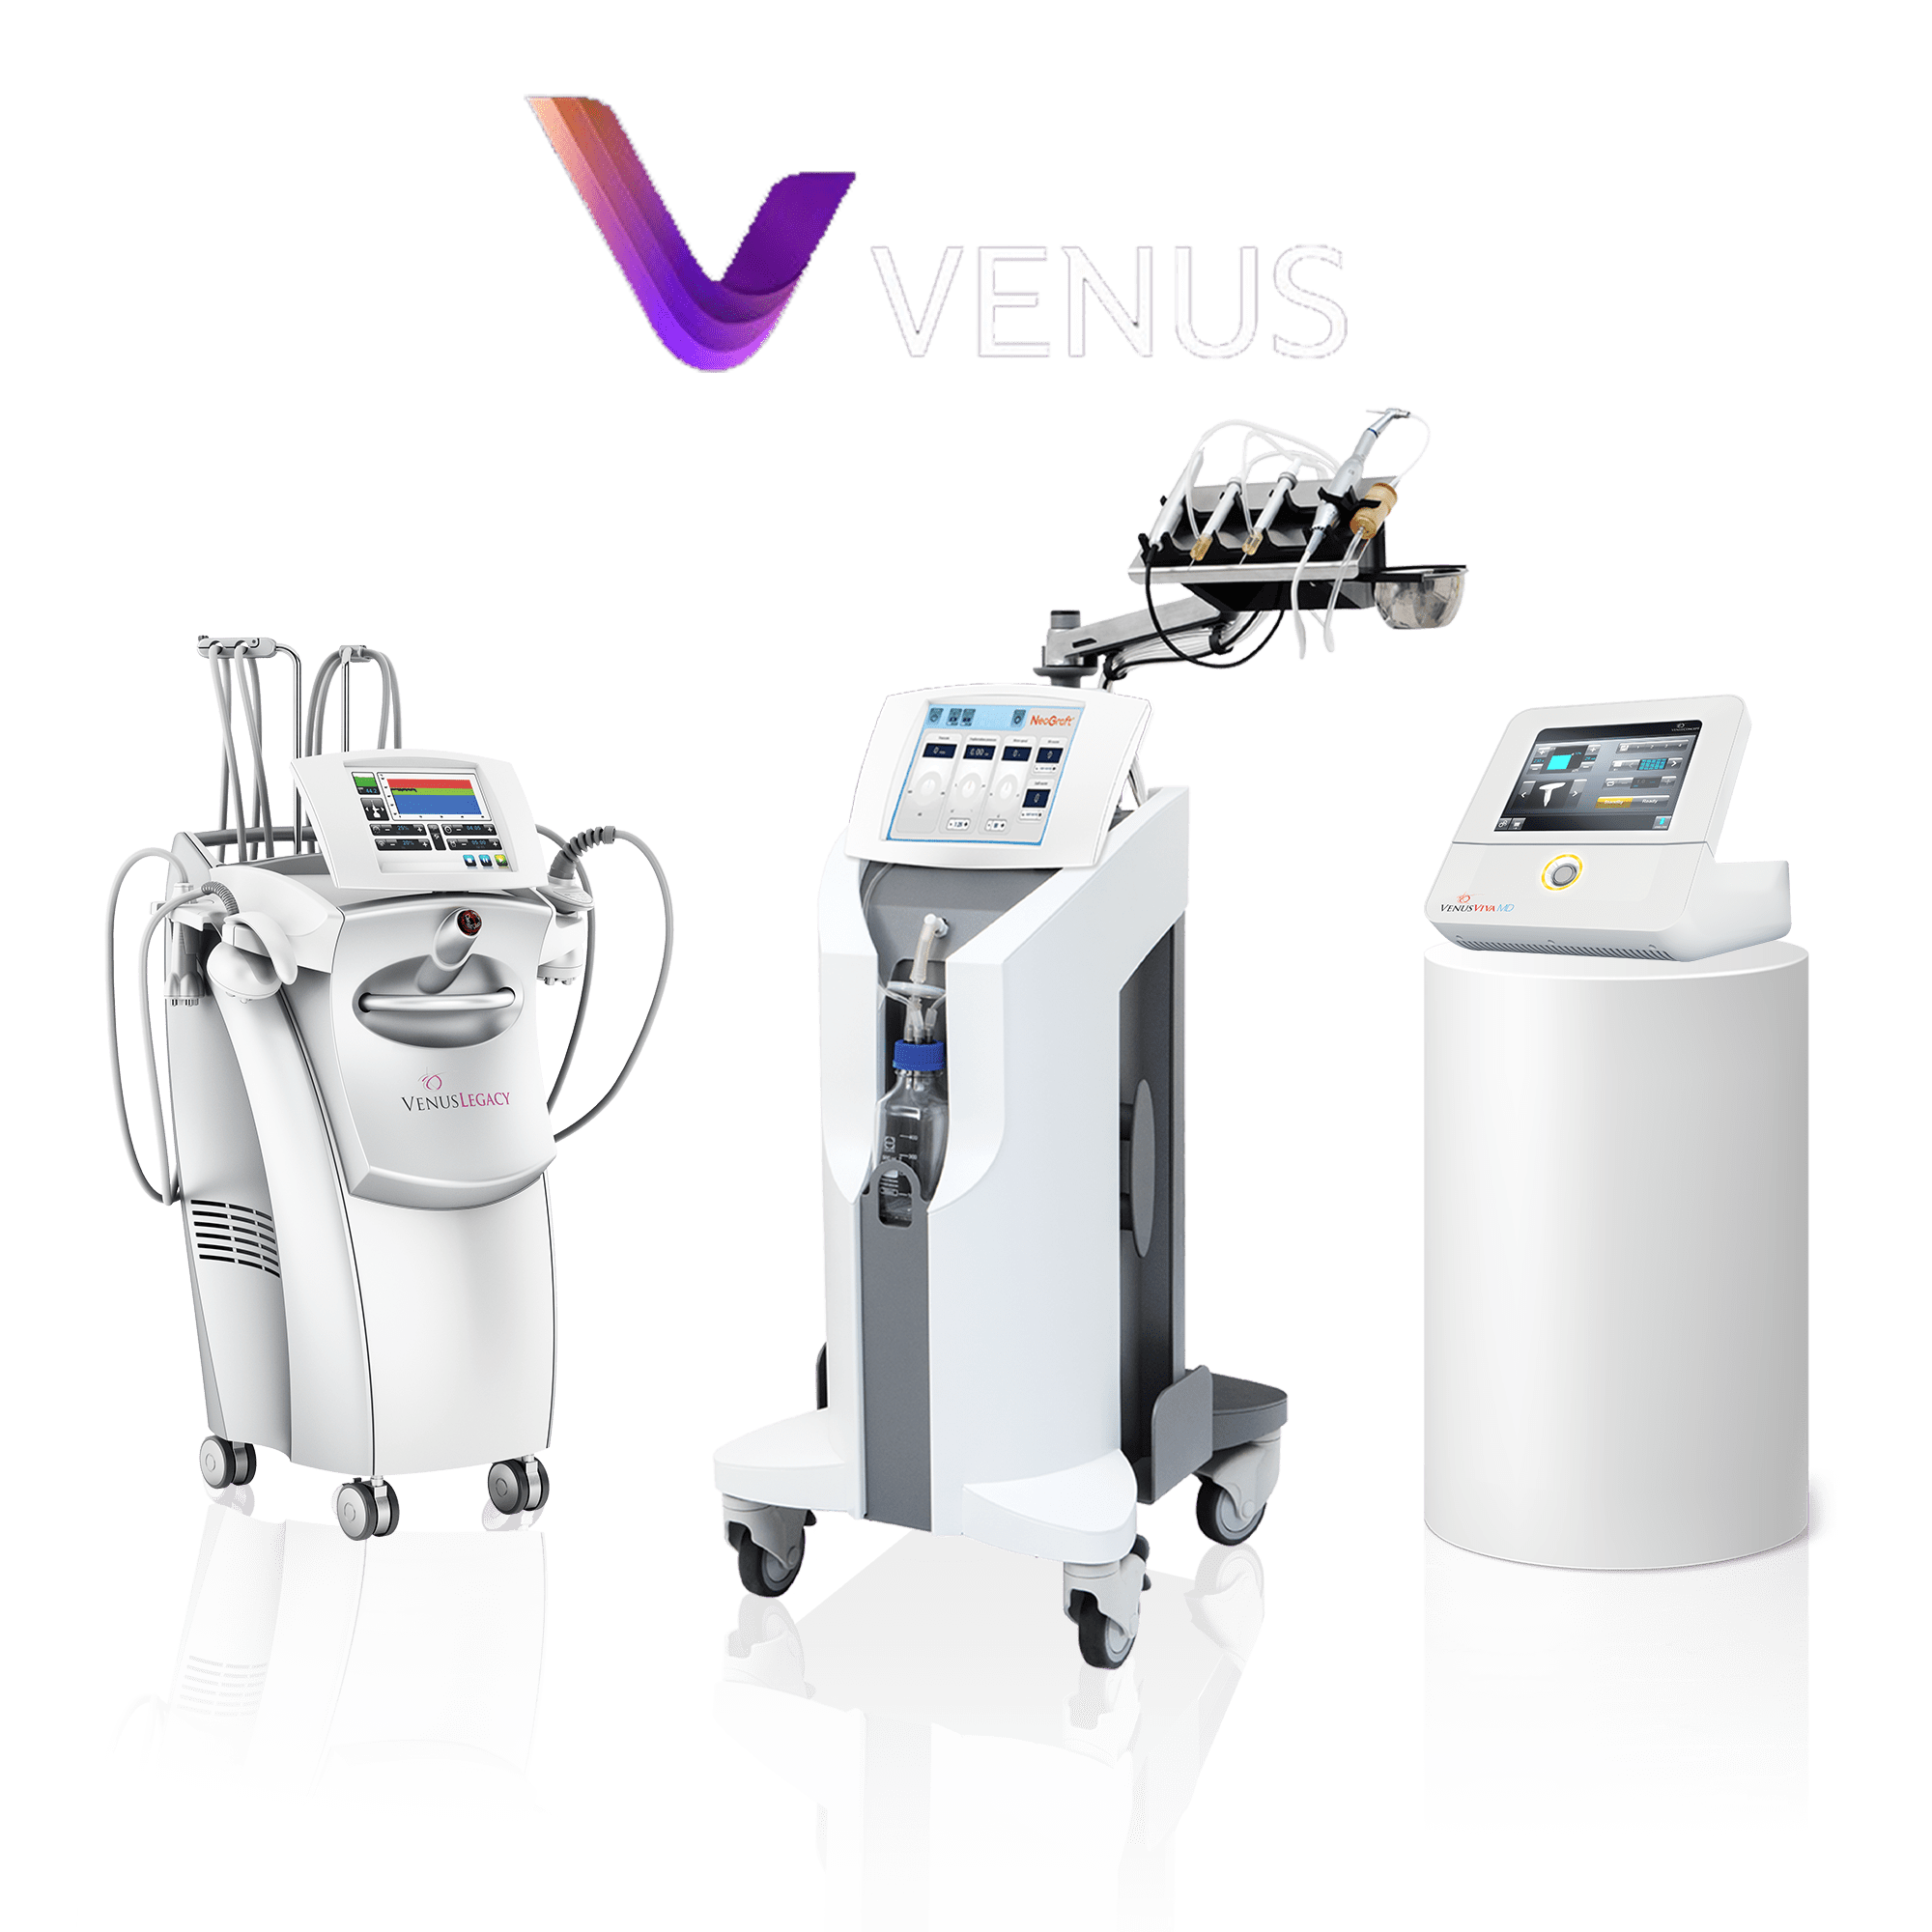 Venus Concept products